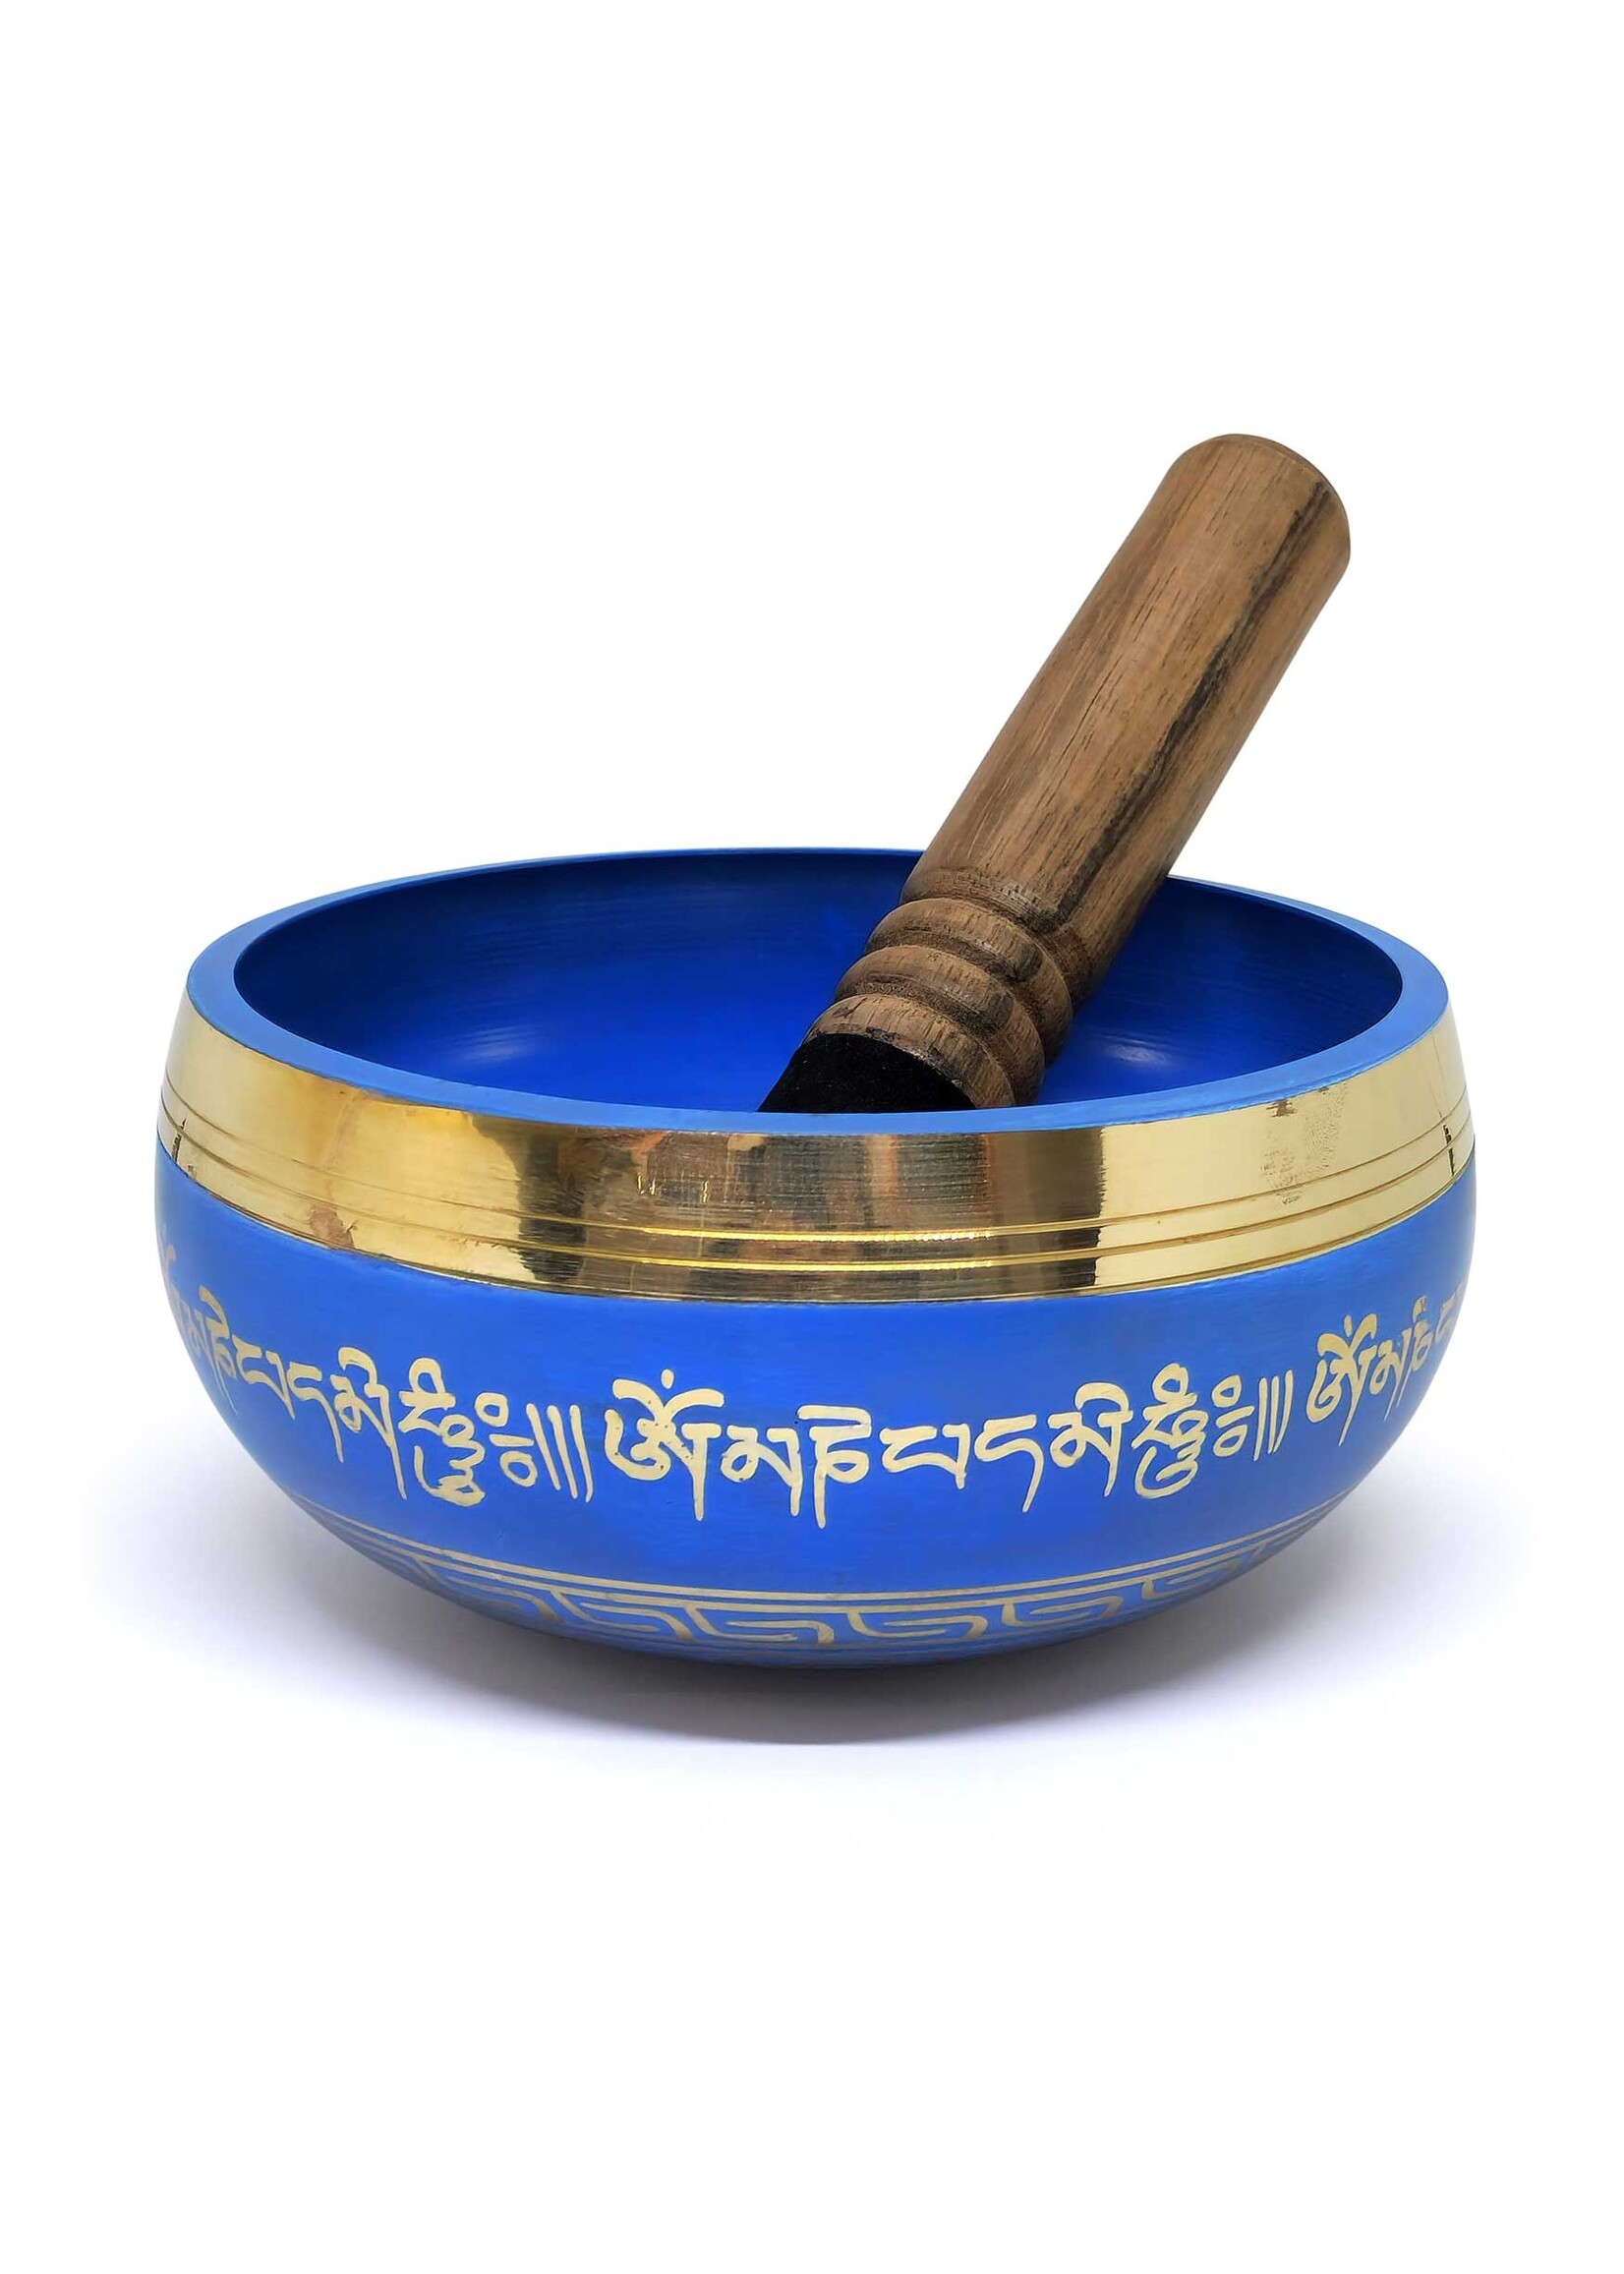 Tibetische Klangschale "Om Mani Padme Hum", blau, aus Messing, Ø 14.5cm, 840g